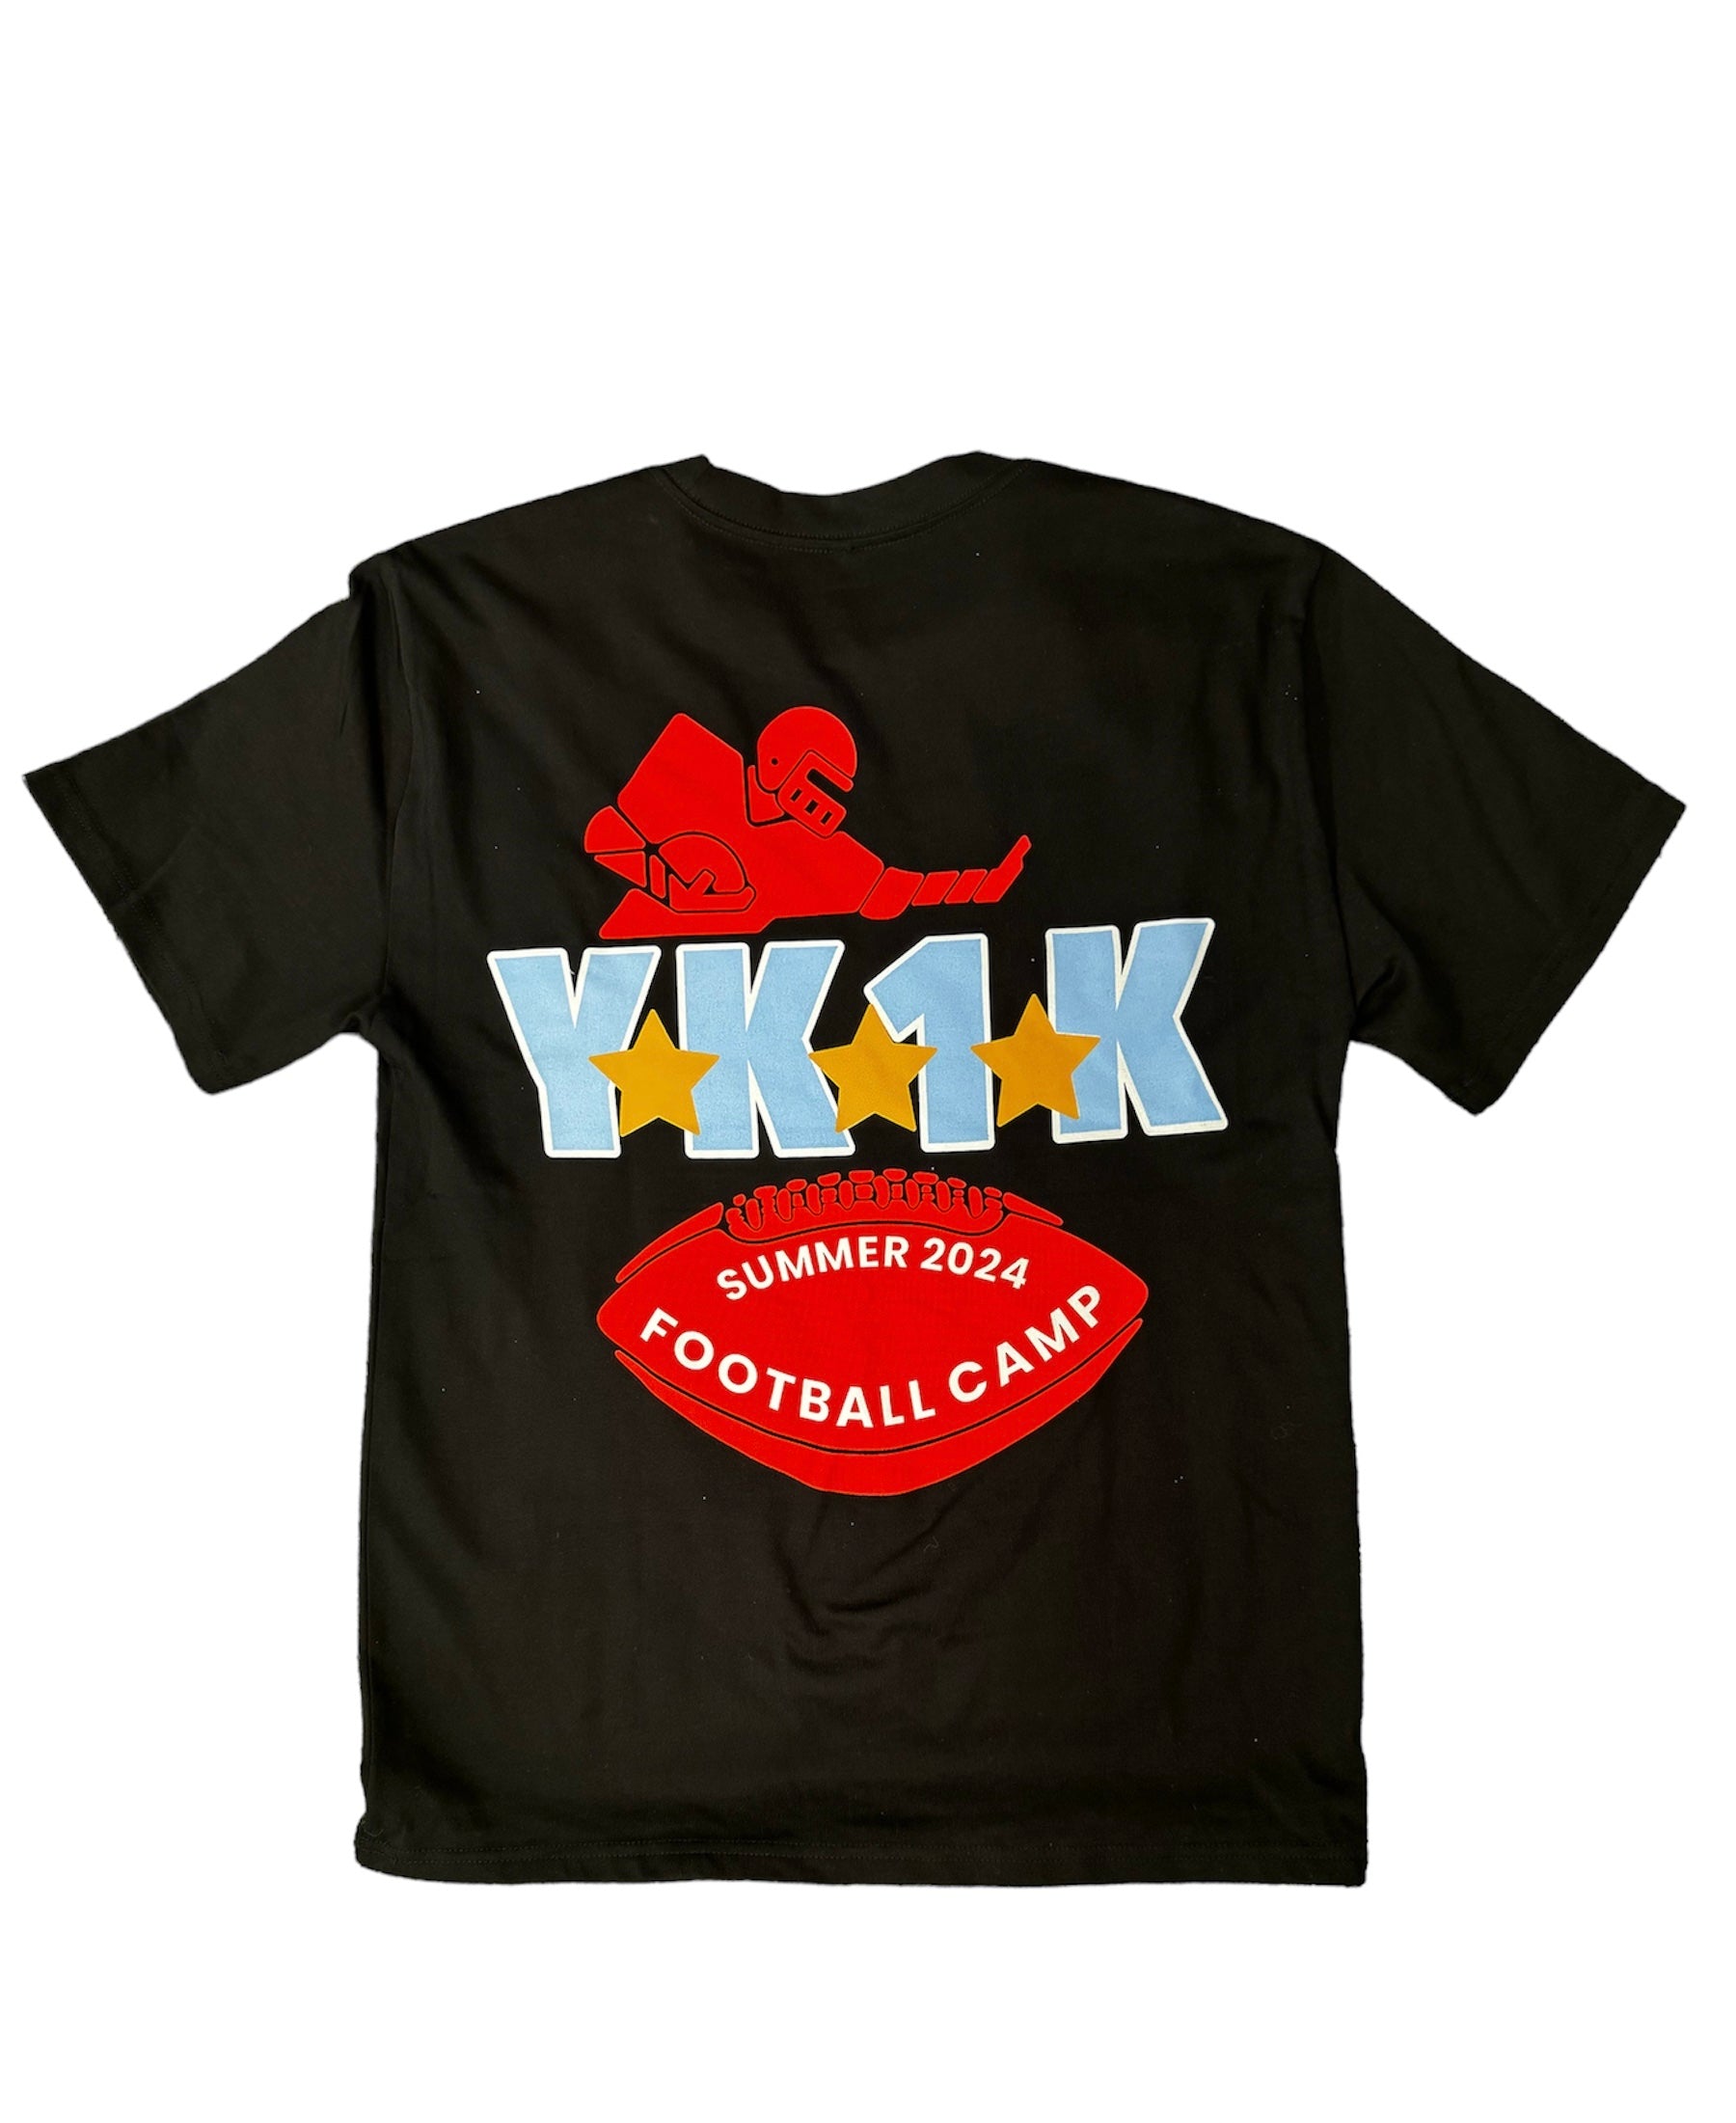 YK1K Football Camp Black